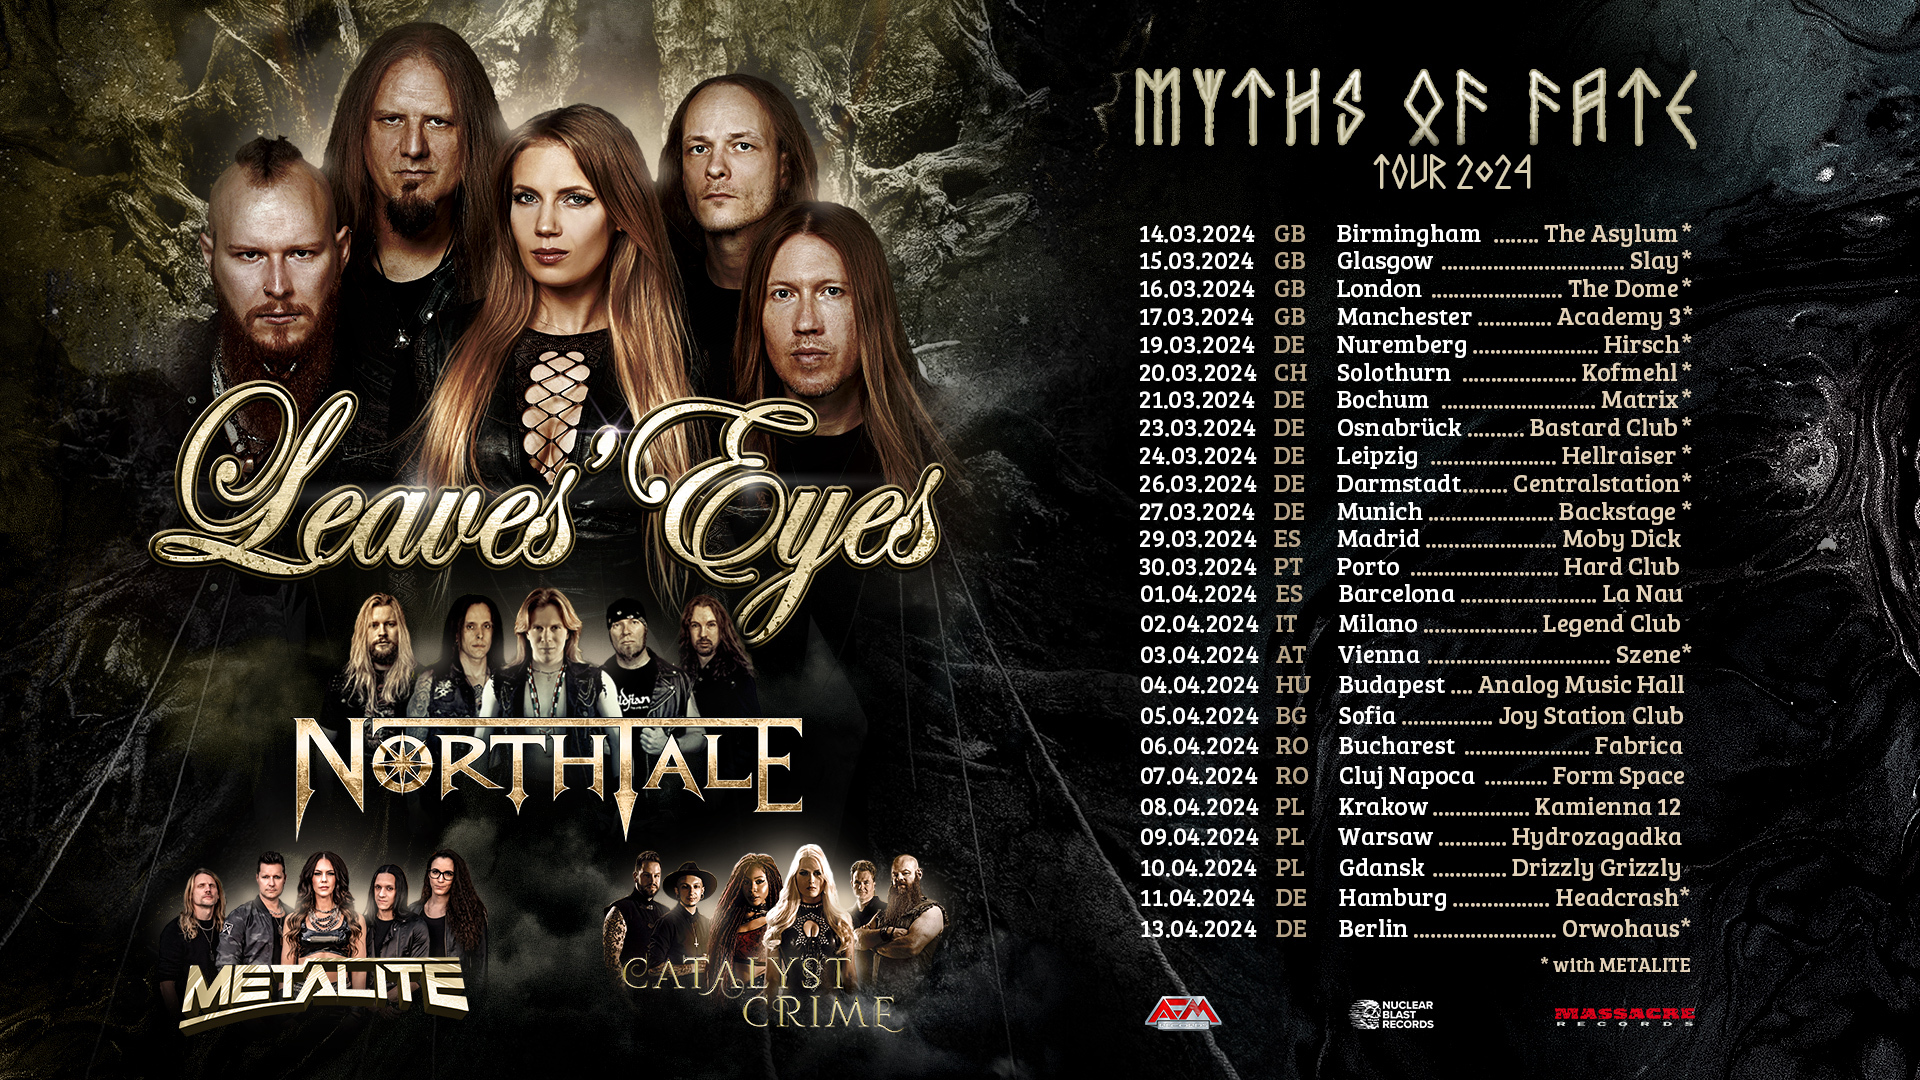 Tourplakat von Leaves Eyes - MYTHS OF FATE TOUR 2024